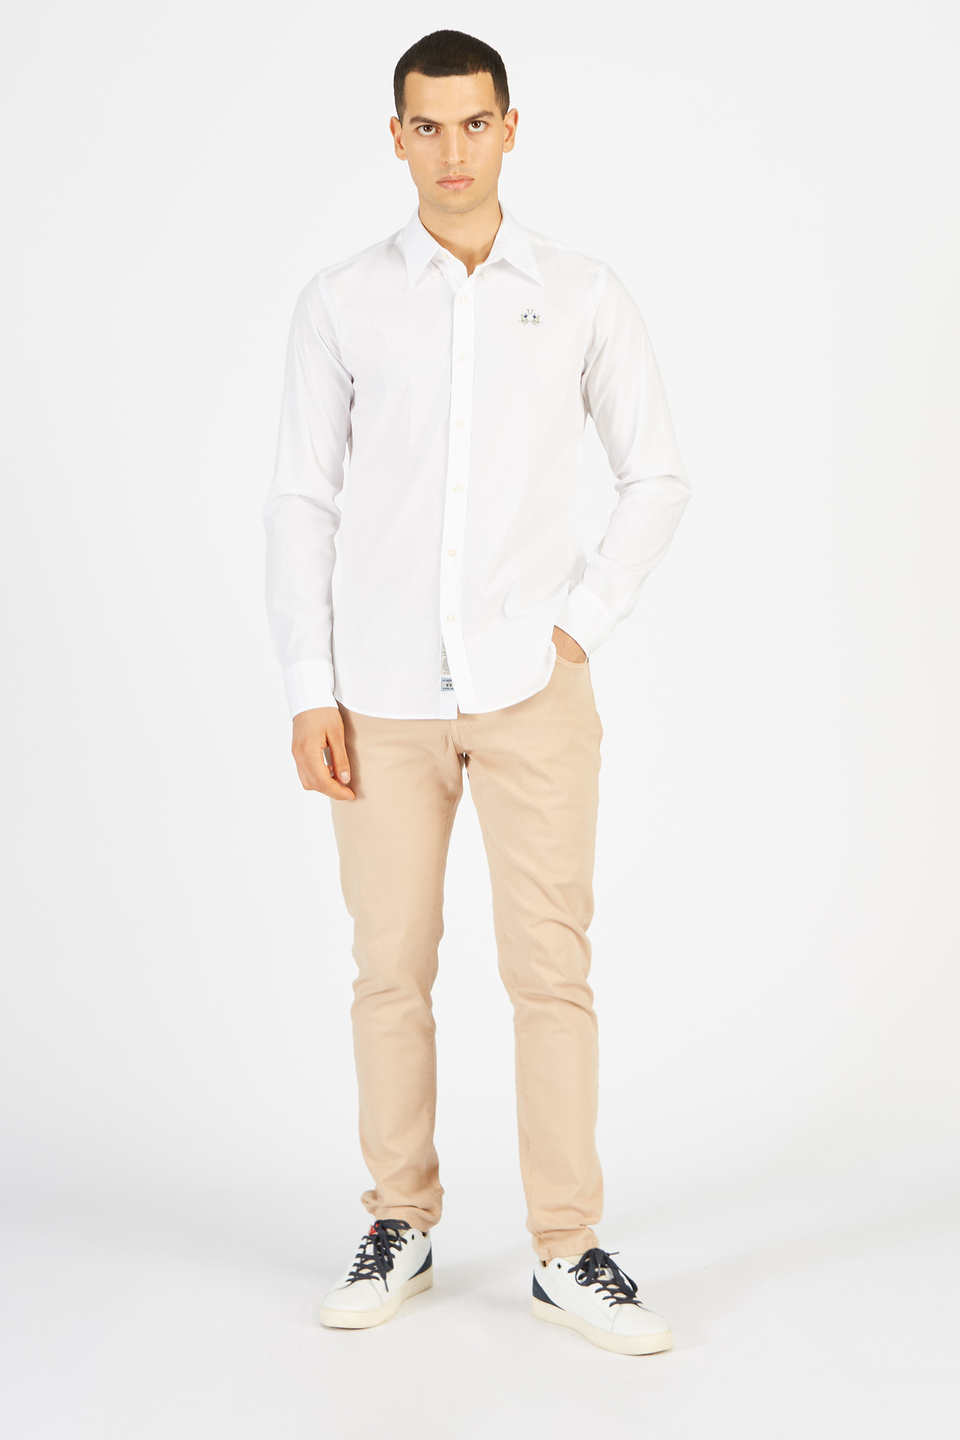 Men's shirt slim fit | La Martina - Official Online Shop